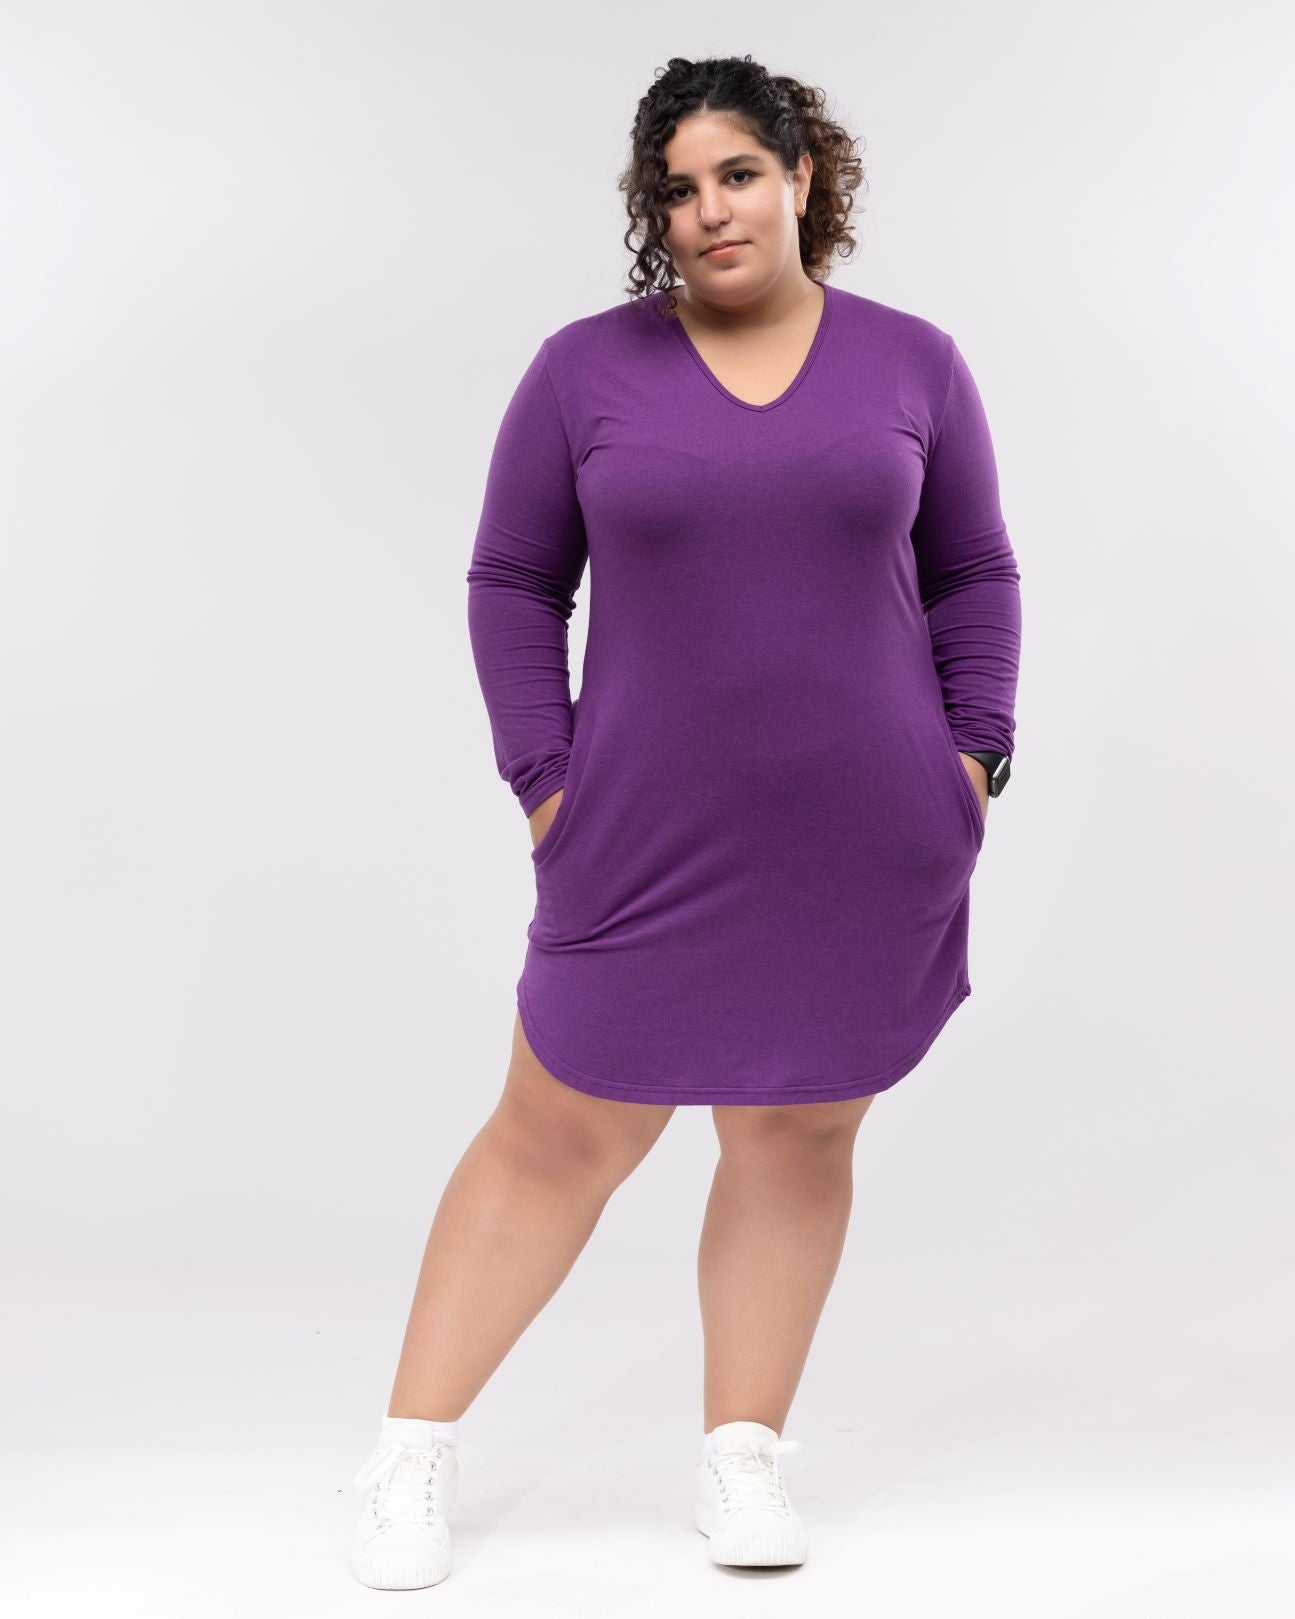 DressBarn Women's Soft and Comfortable Tummy Control Legging, Pima Cotton  and Spandex